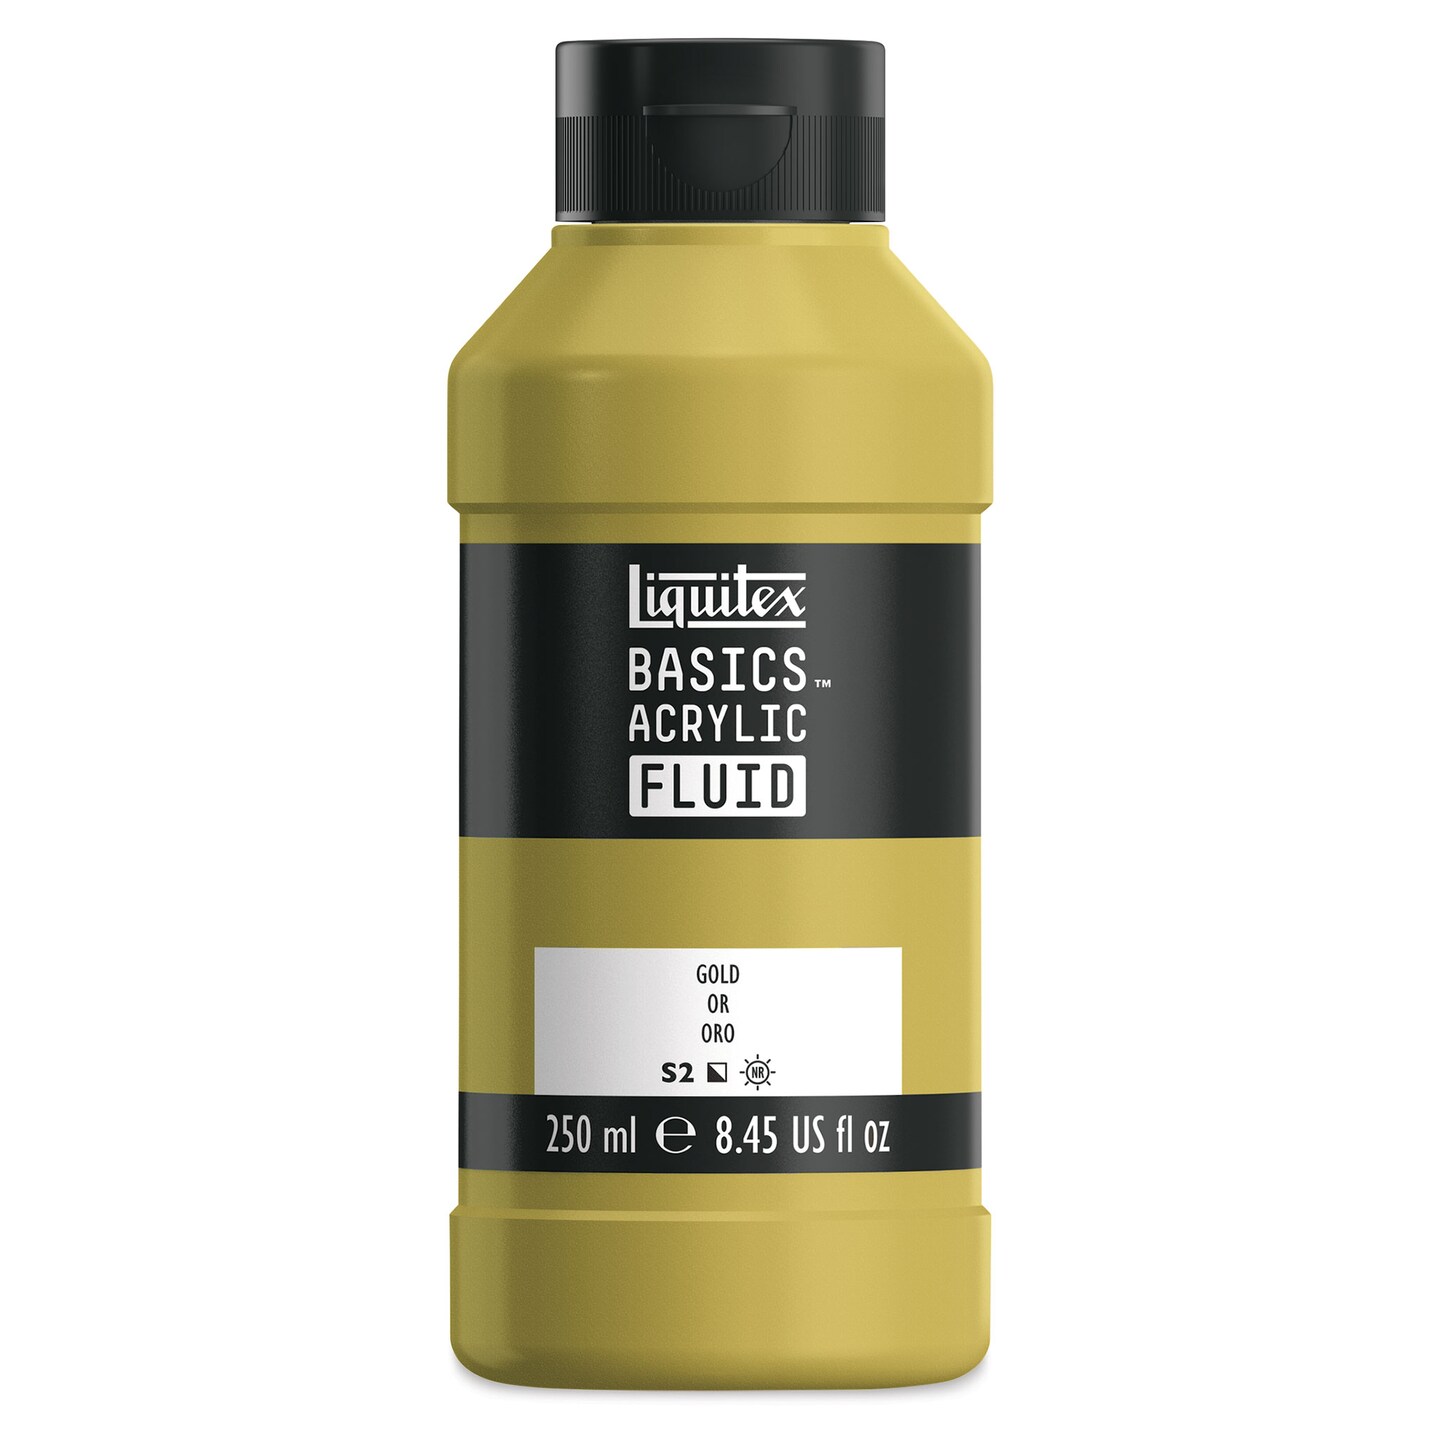 Liquitex Basics Acrylic Fluid Paint - Gold, 250 ml